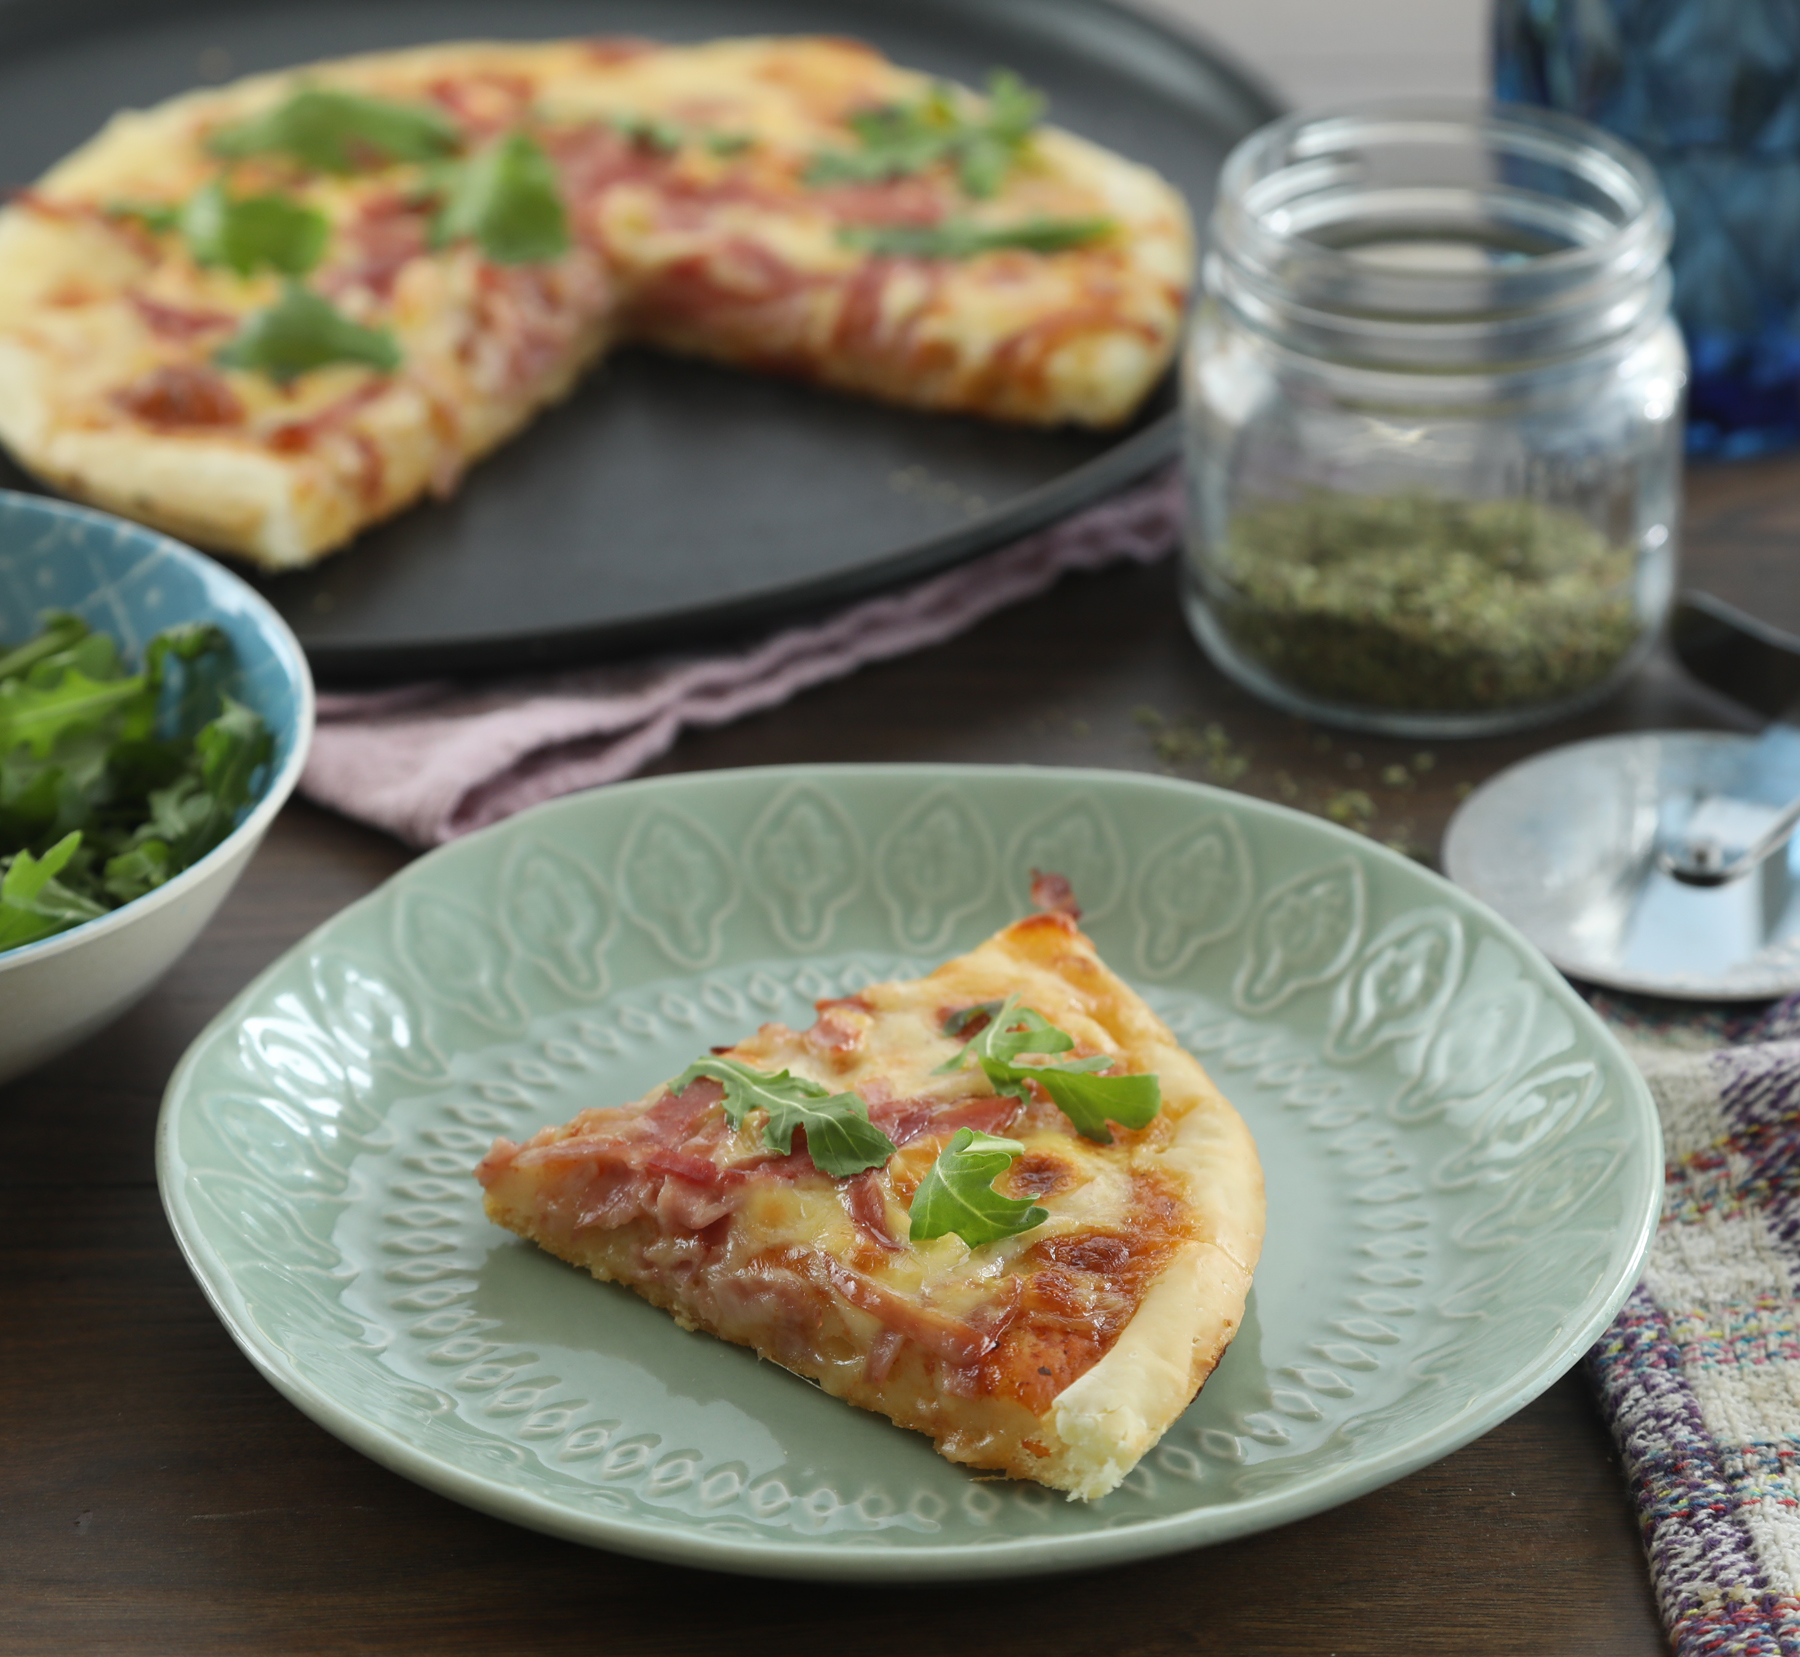 Receta Pizza para celíacos - Santa María Productos sin gluten